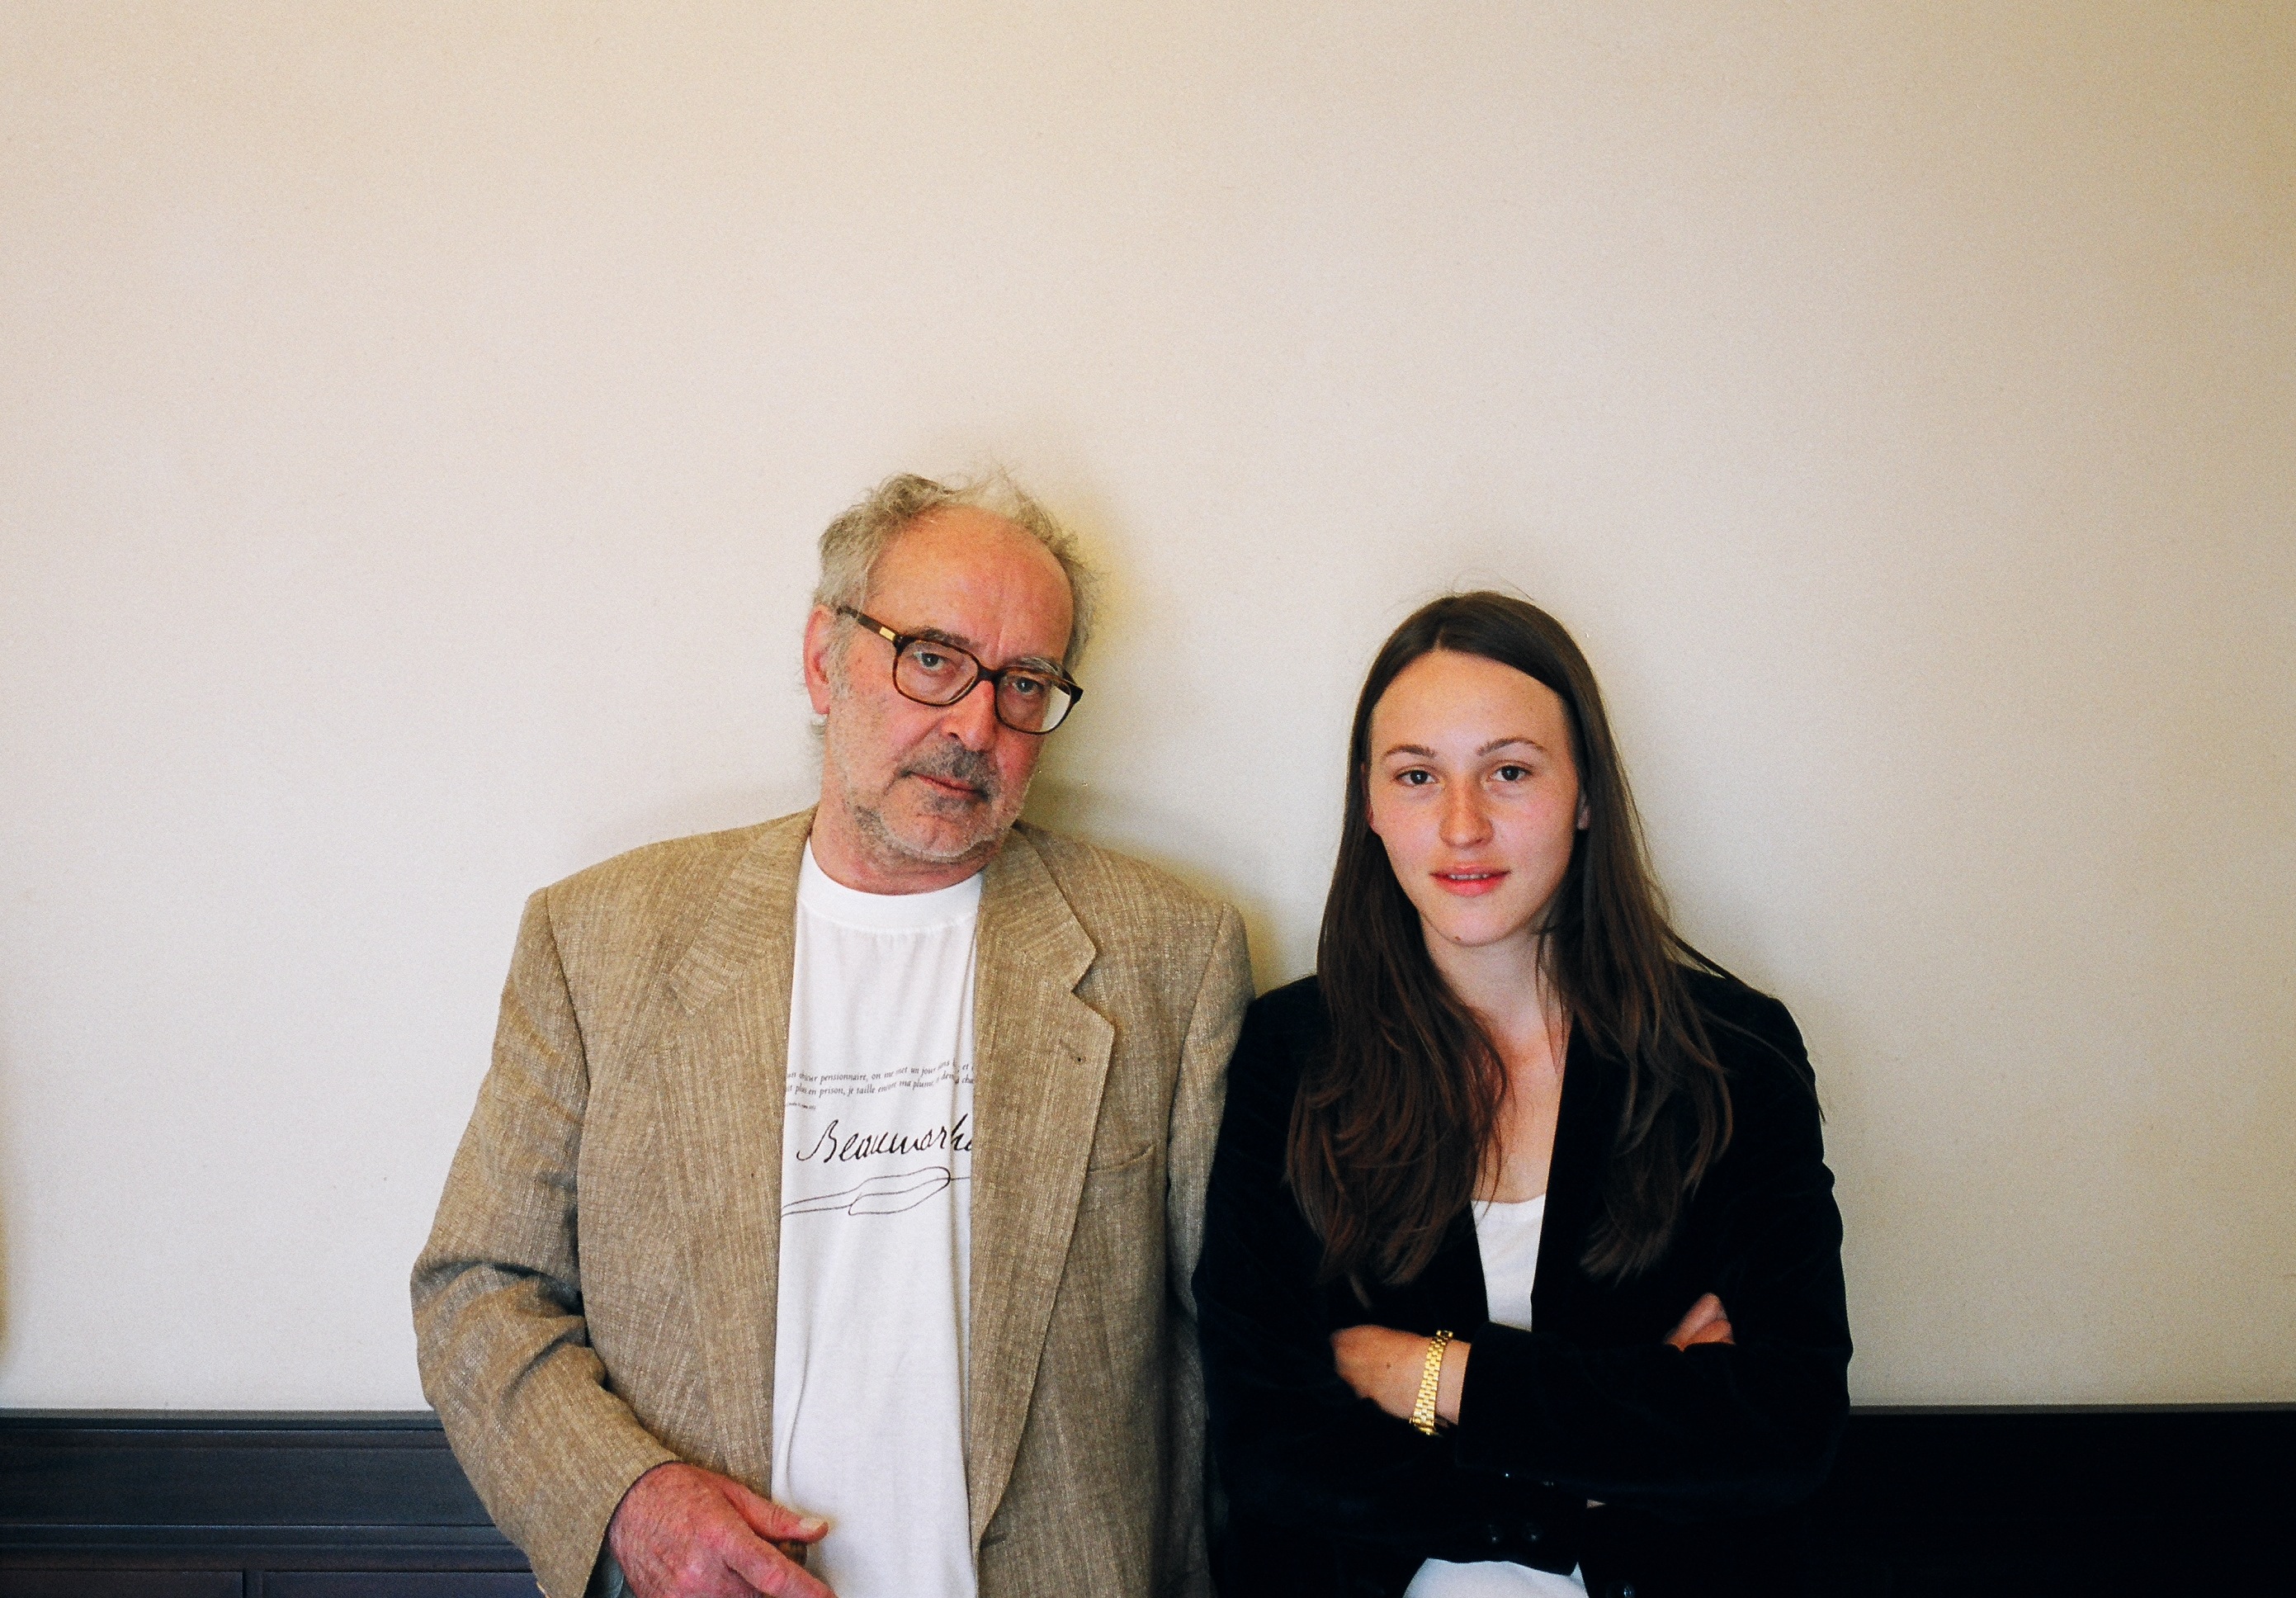 Jean-Luc Godard and Sarah Adler/ Cannes Film Festival